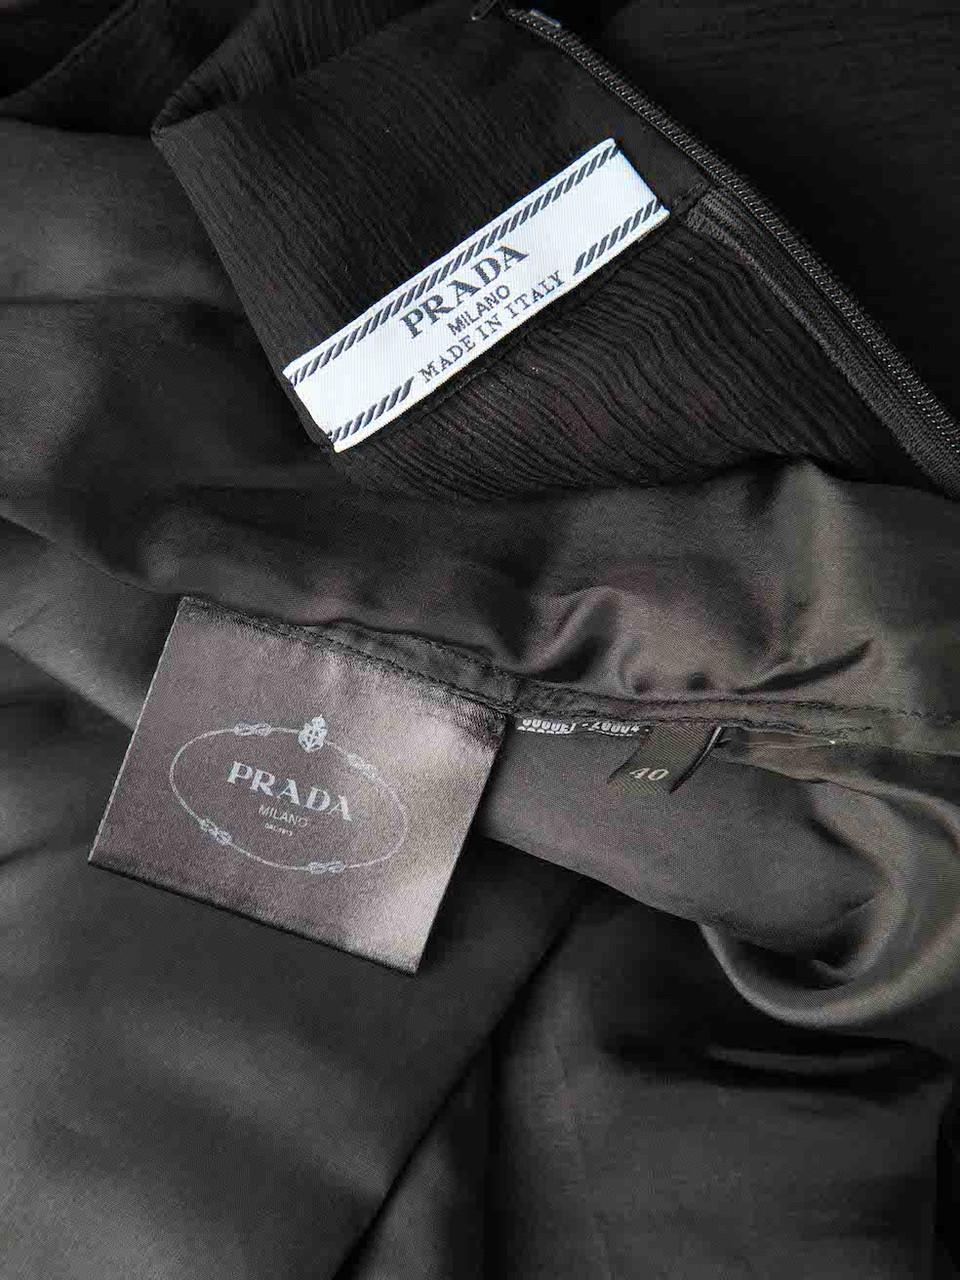 Prada Black Crepe Short Sleeves Top Size S For Sale 1